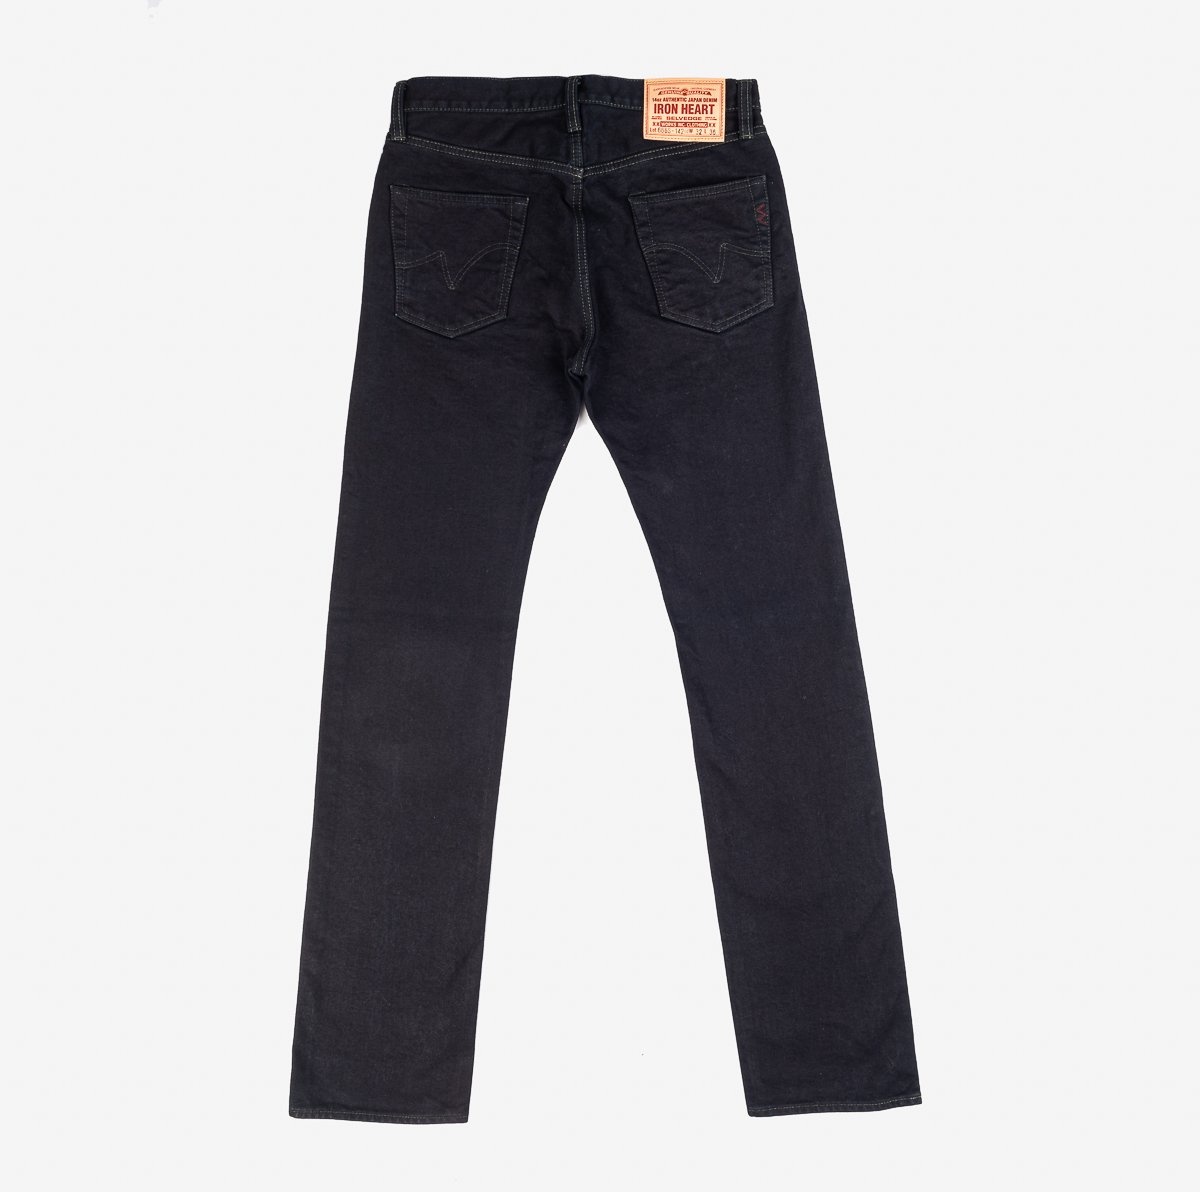 IH-666S-142od 14oz Selvedge Denim Slim Straight Cut Jeans - Indigo Overdyed Black - 5